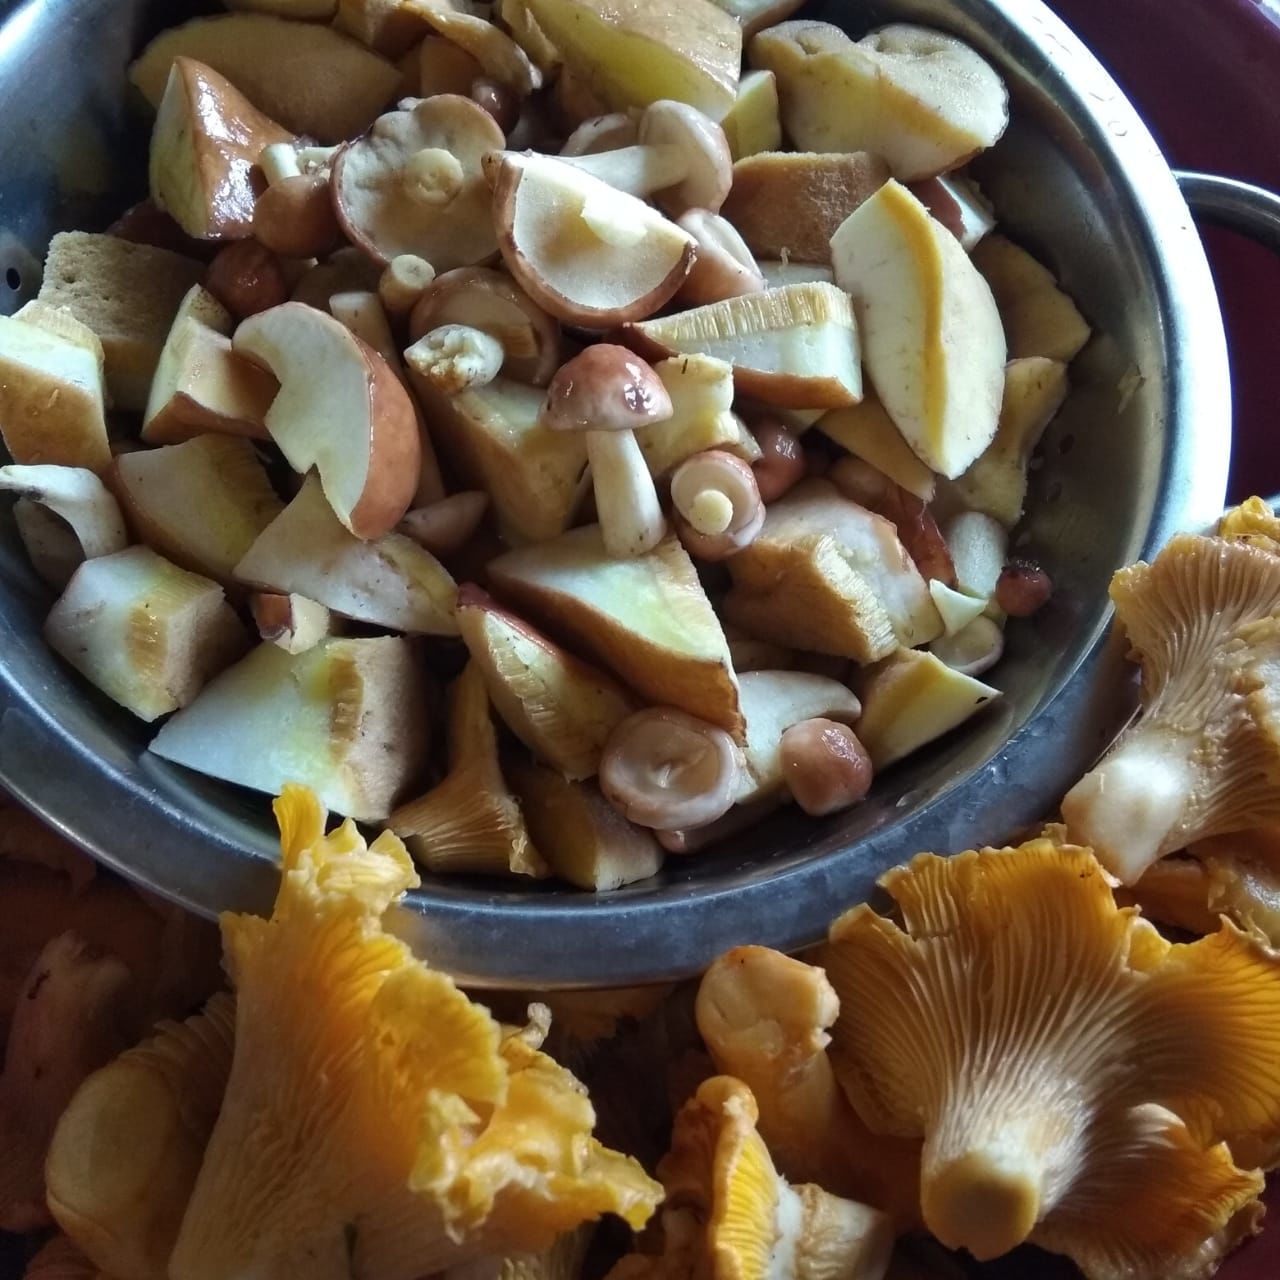 Рецепт заготовки грибов на зиму